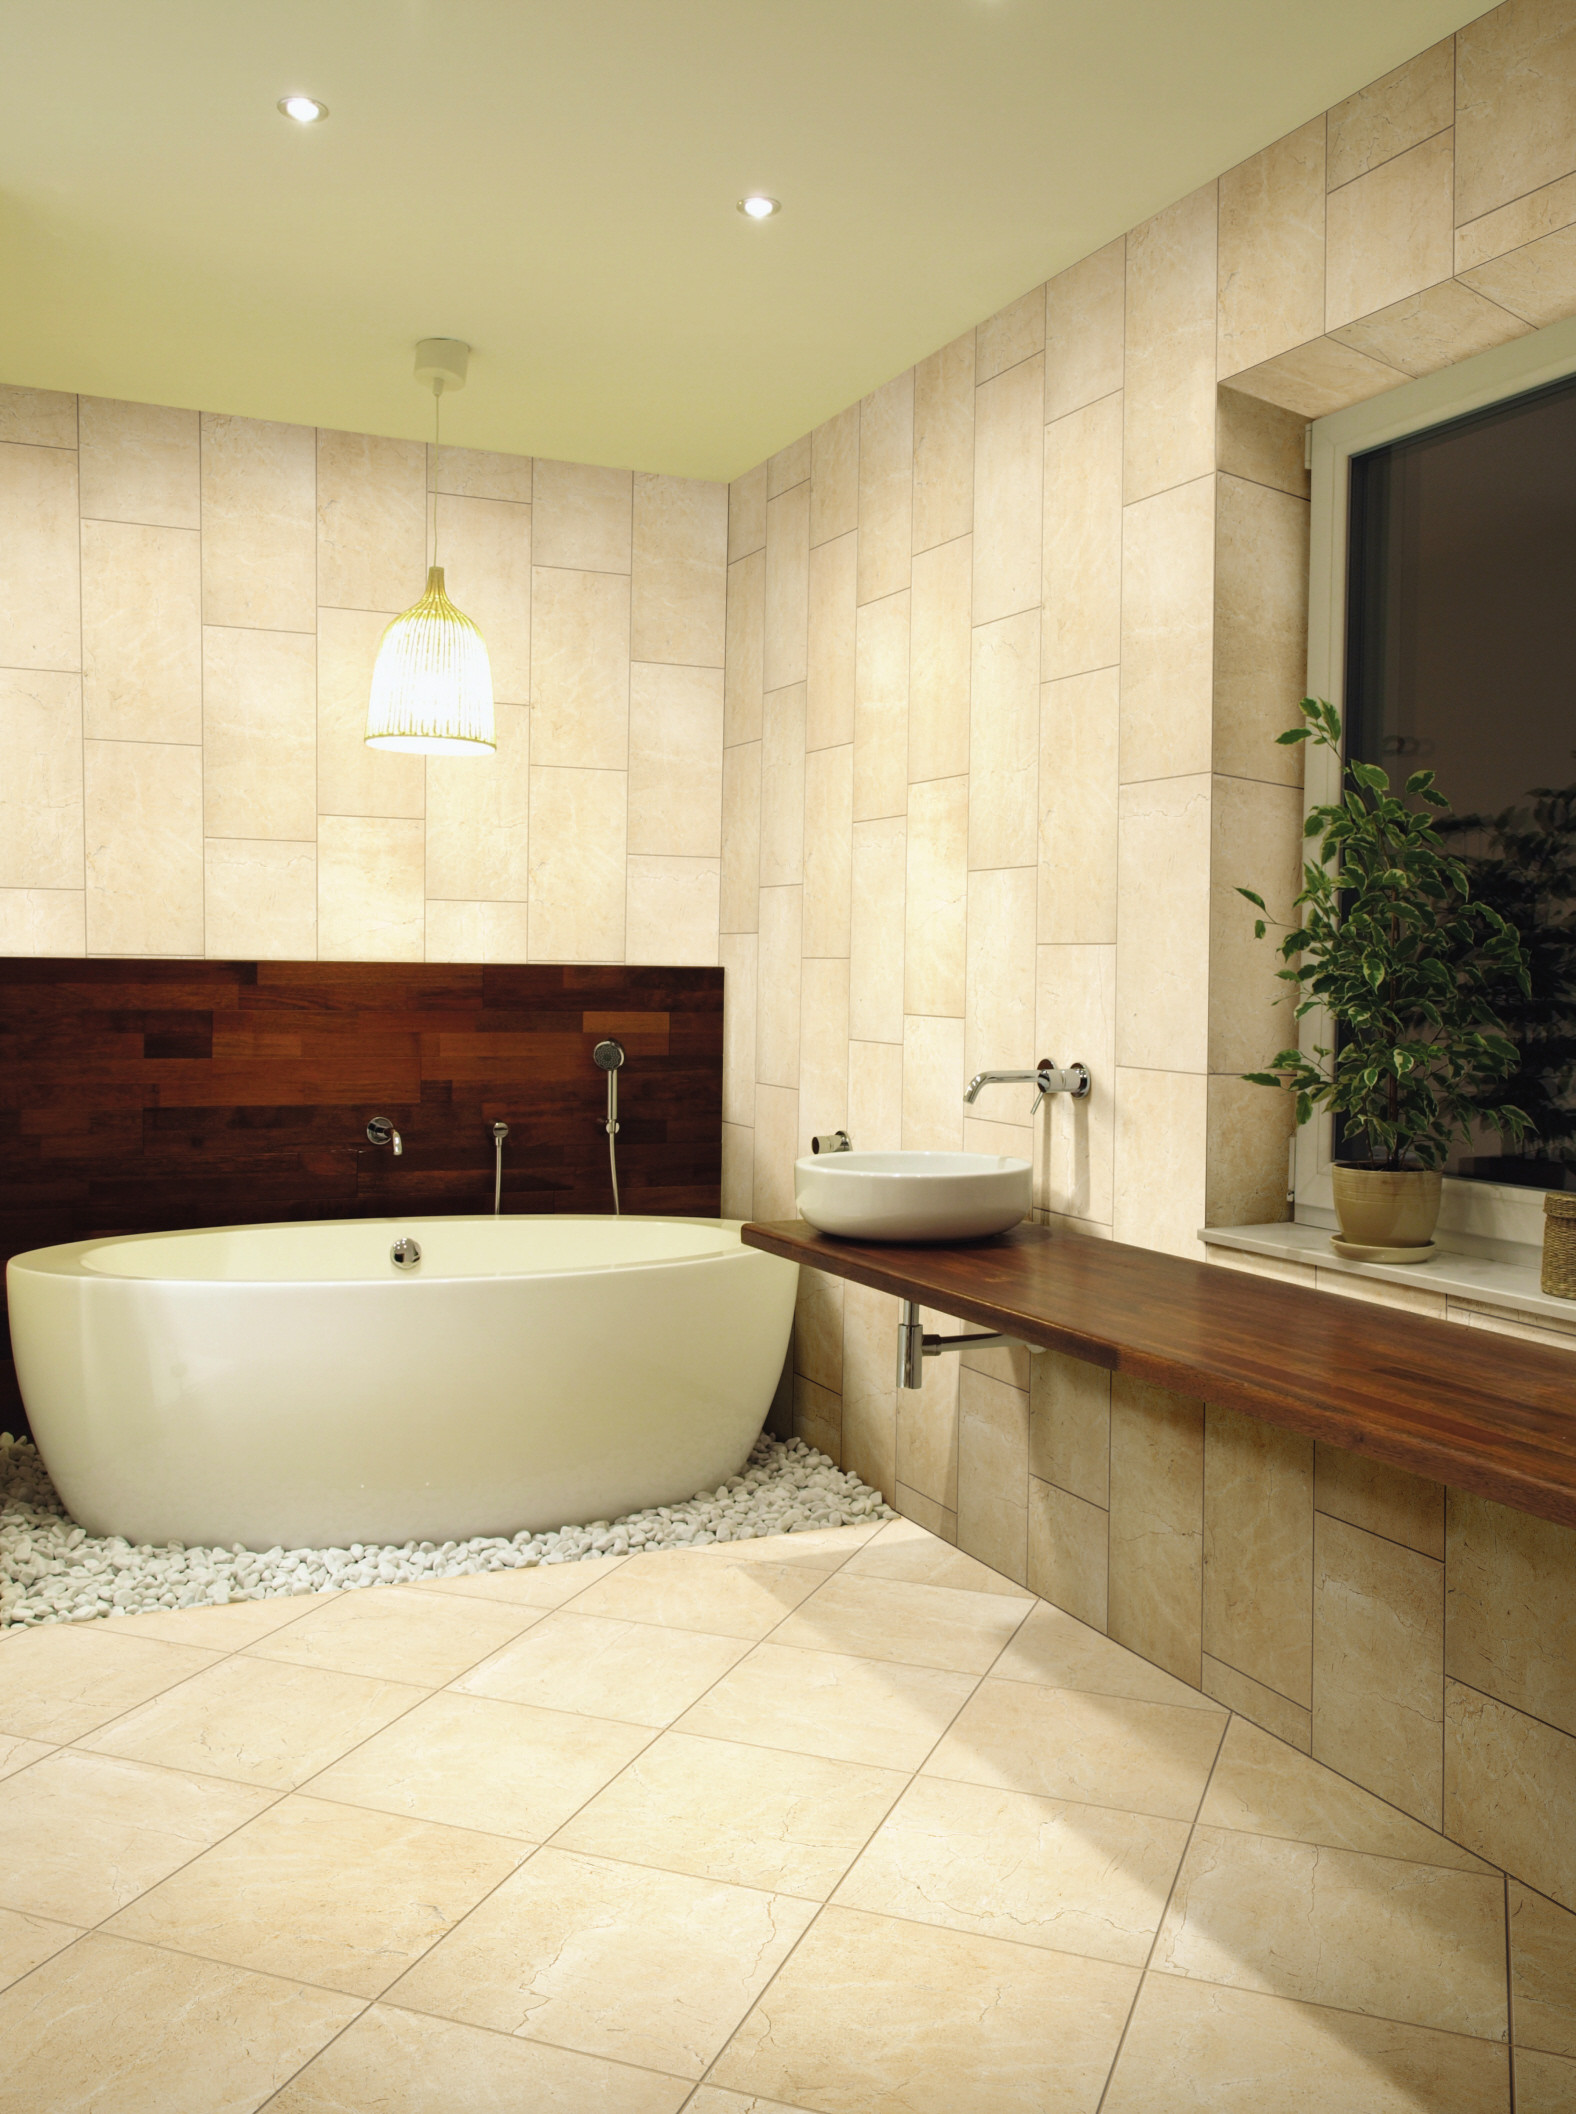 12X24 Bathroom Tile
 30 of 12x24 tile in small bathroom 2020